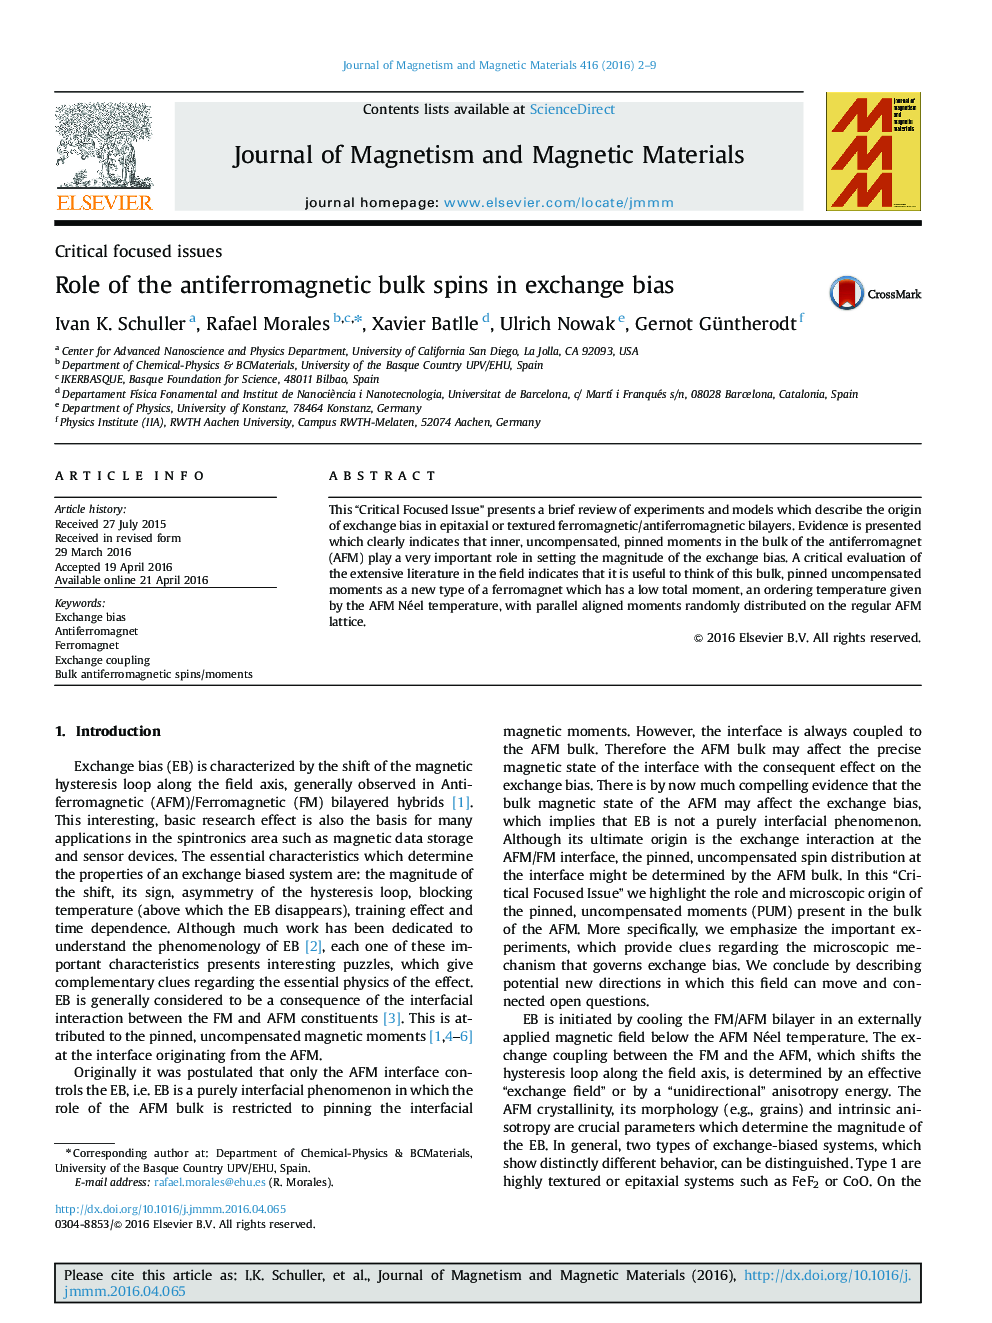 Role of the antiferromagnetic bulk spins in exchange bias